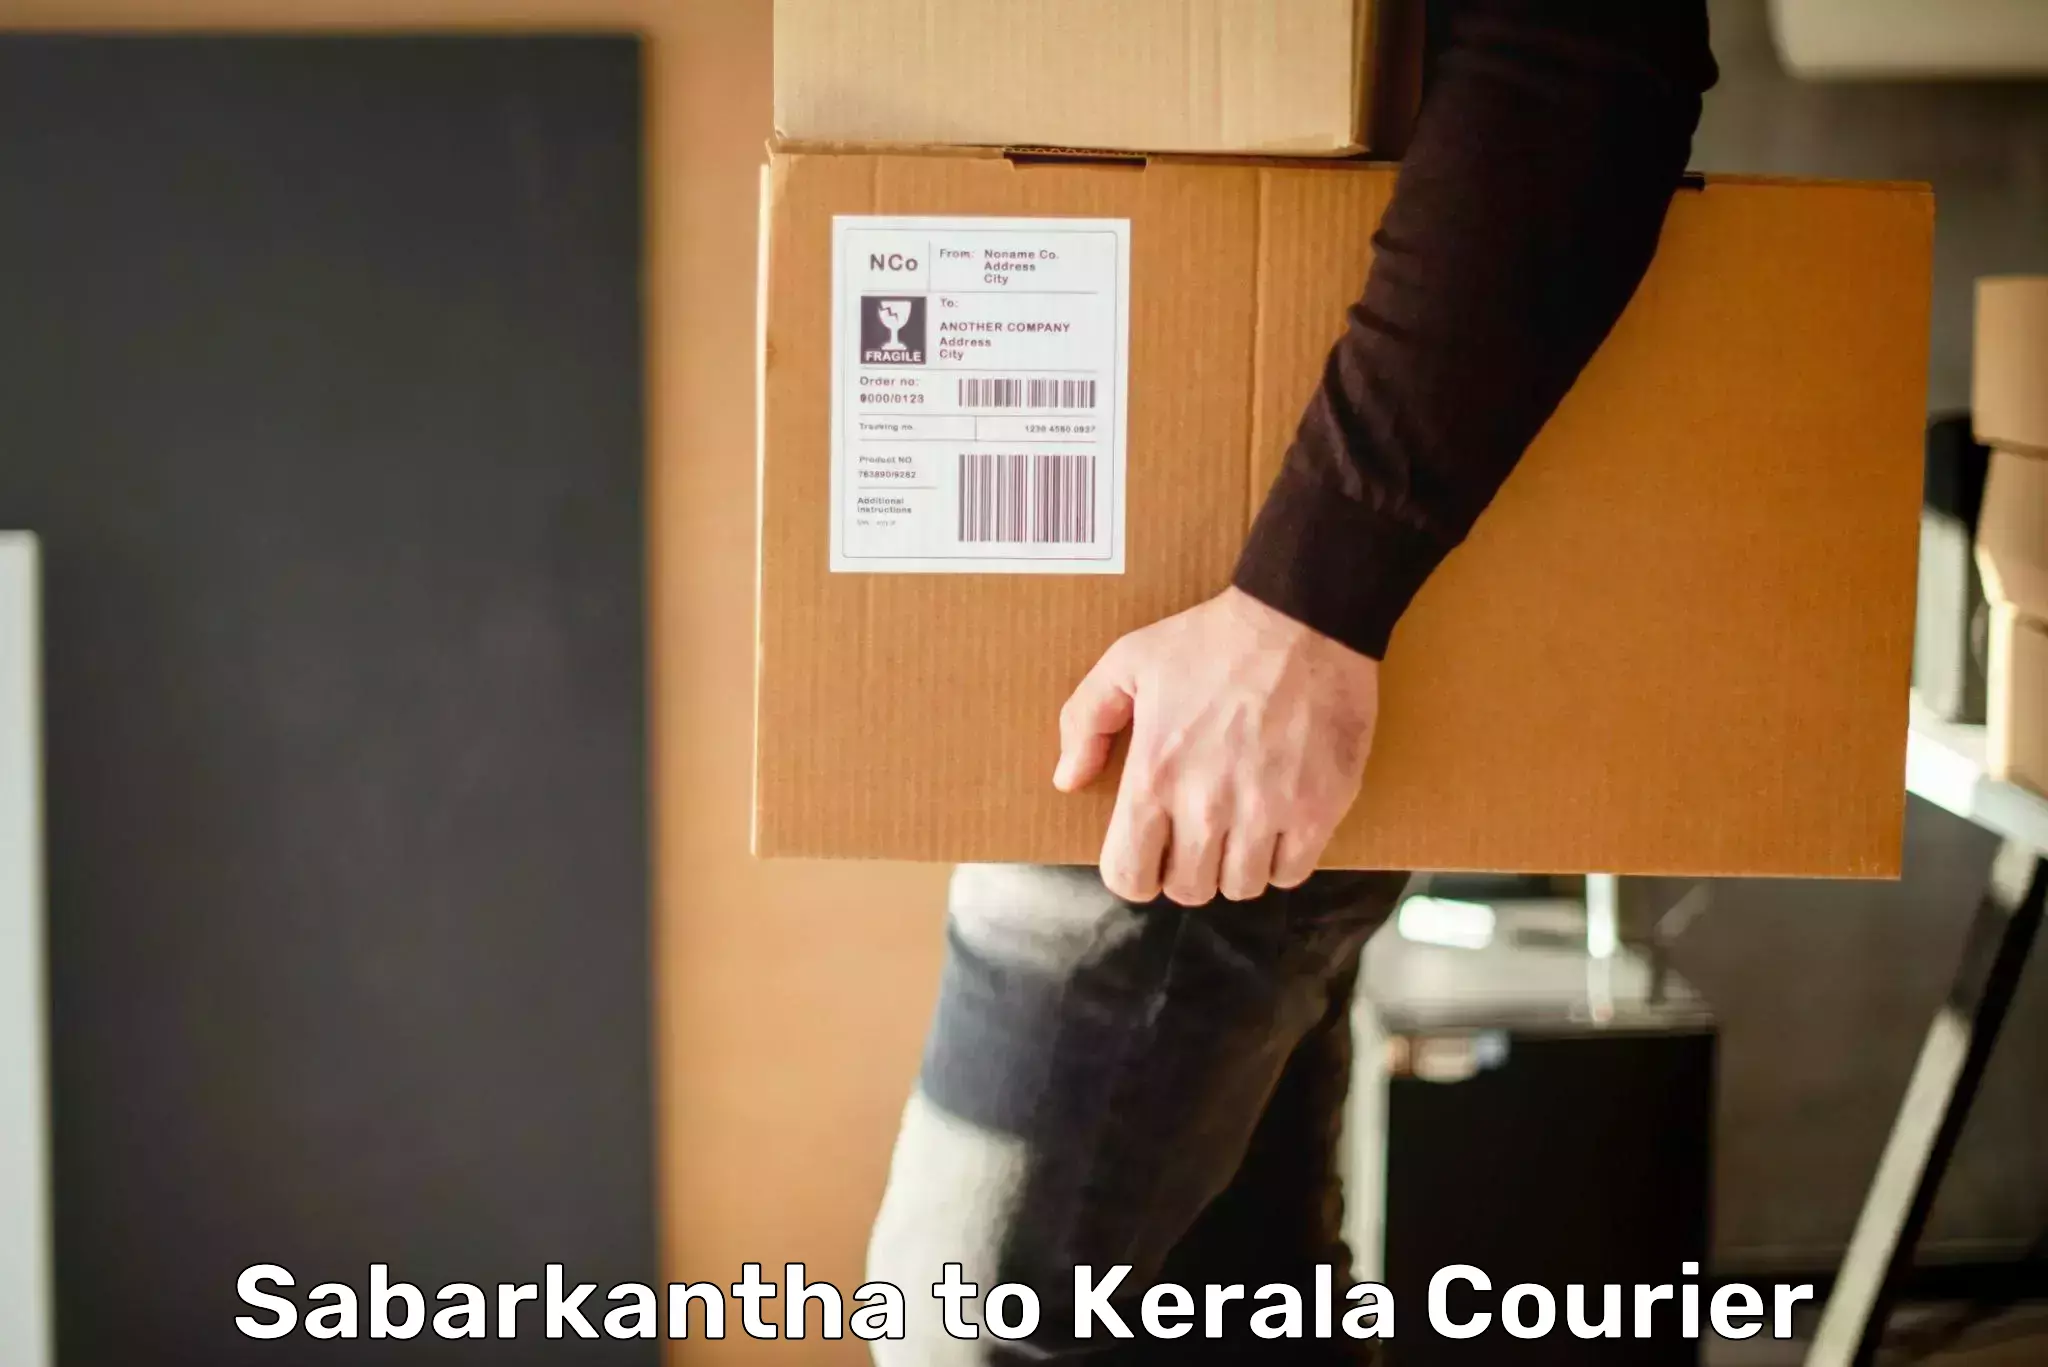 Expedited shipping methods Sabarkantha to Thiruvananthapuram